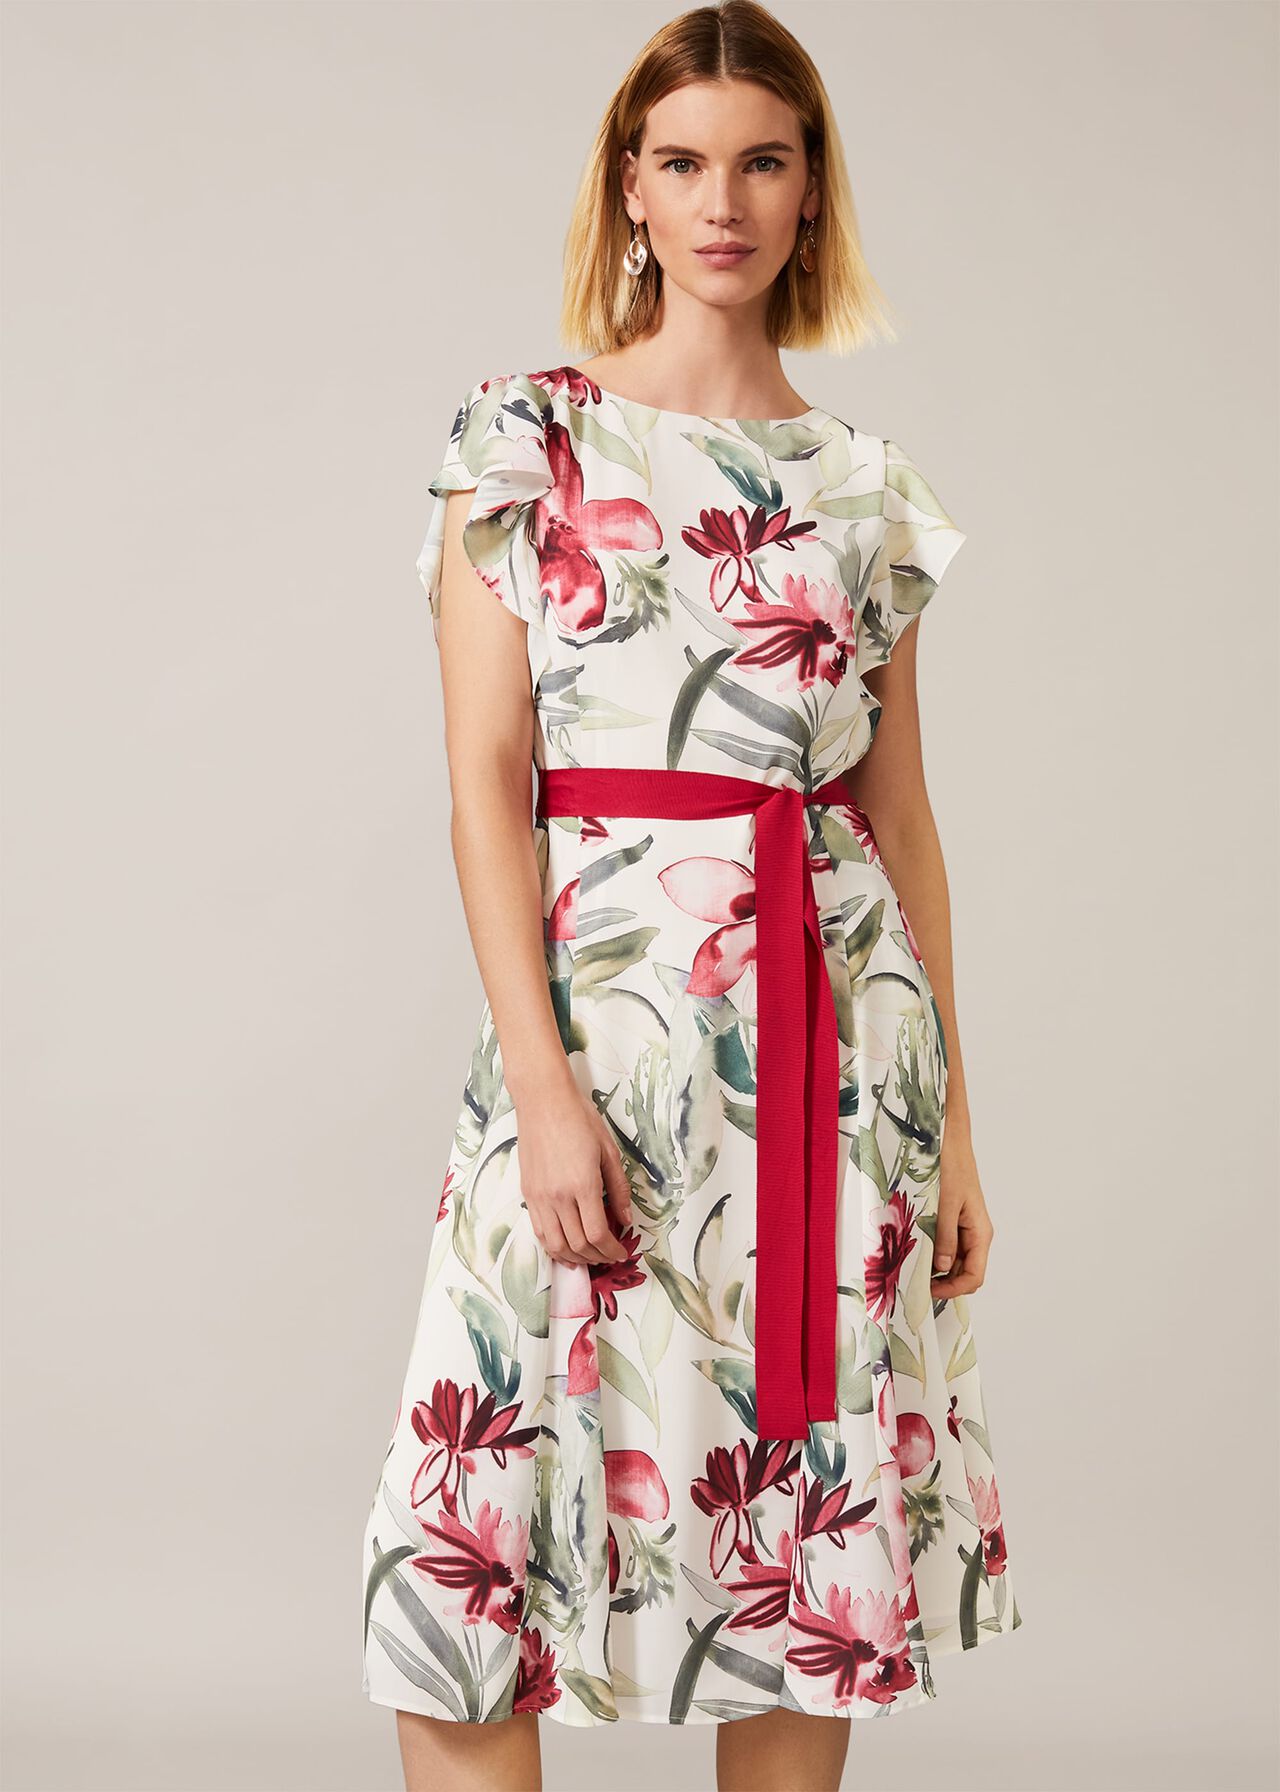 Carlotta Floral Dress | Phase Eight